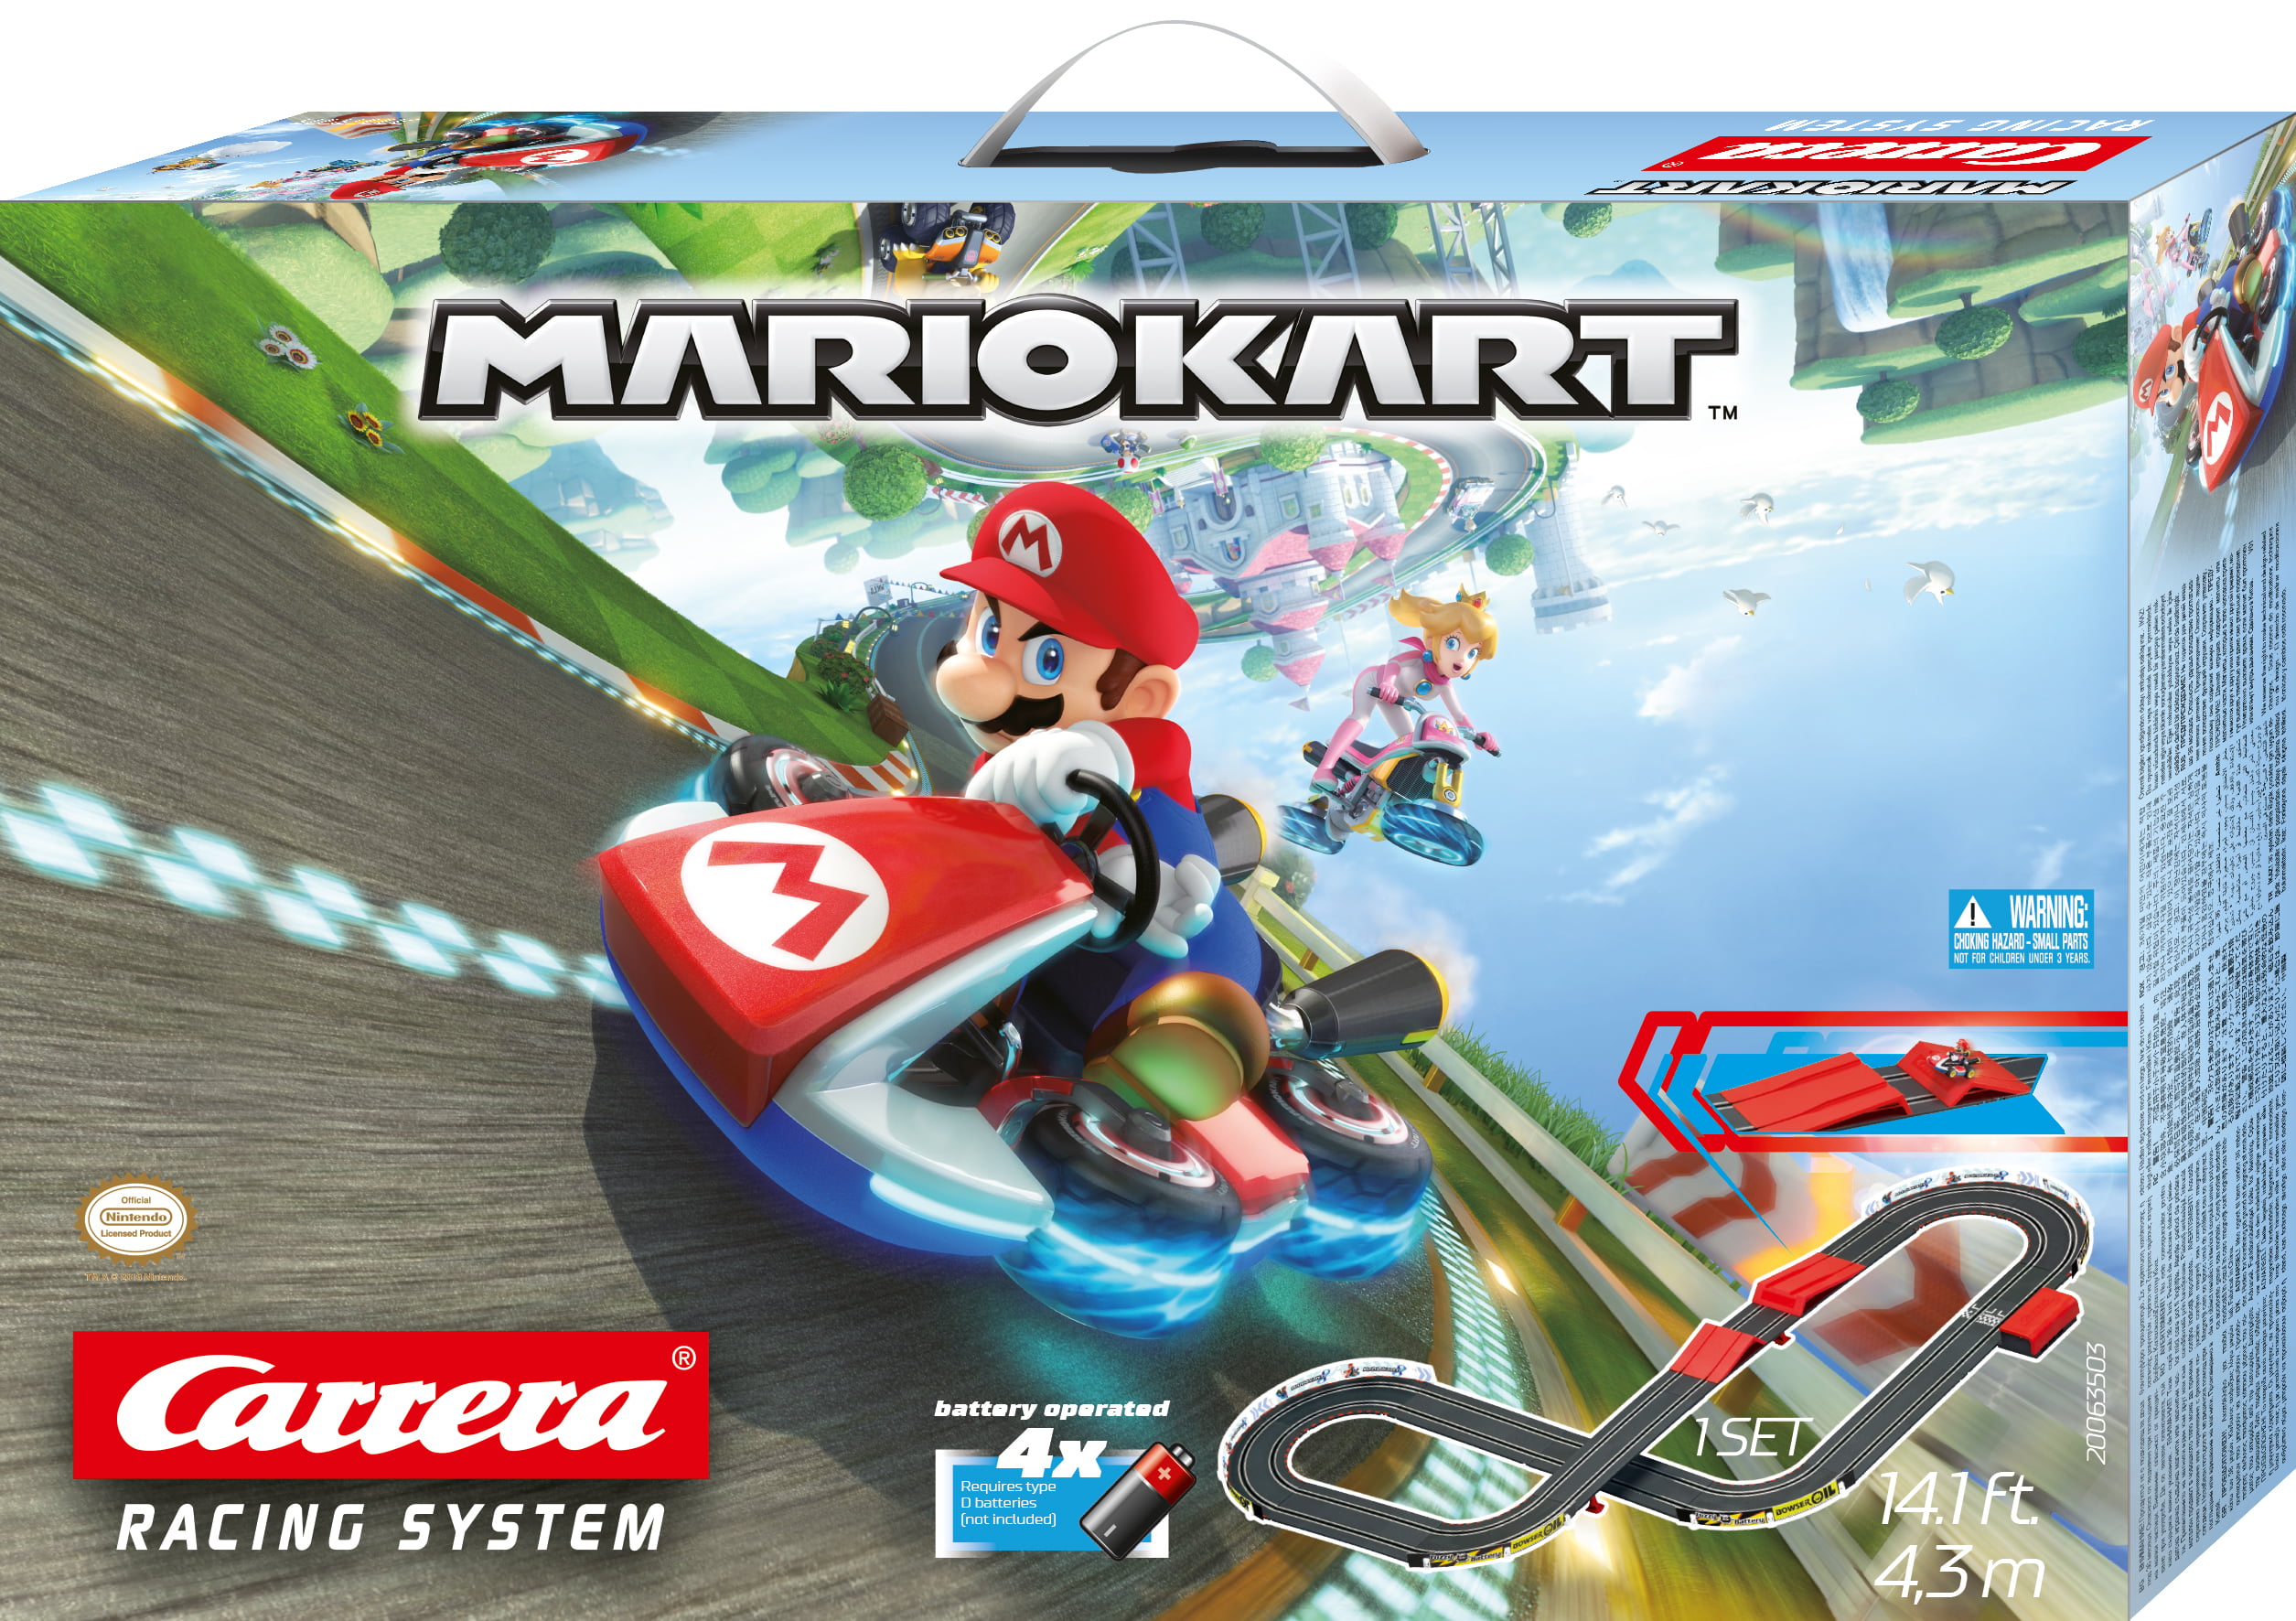 Carrera Racing System Battery Operated 1:43 Scale Mario Kart 14-ft. Slot  Car Race Track Set with Jump Ramp featuring Mario versus Luigi Slot Car Set  